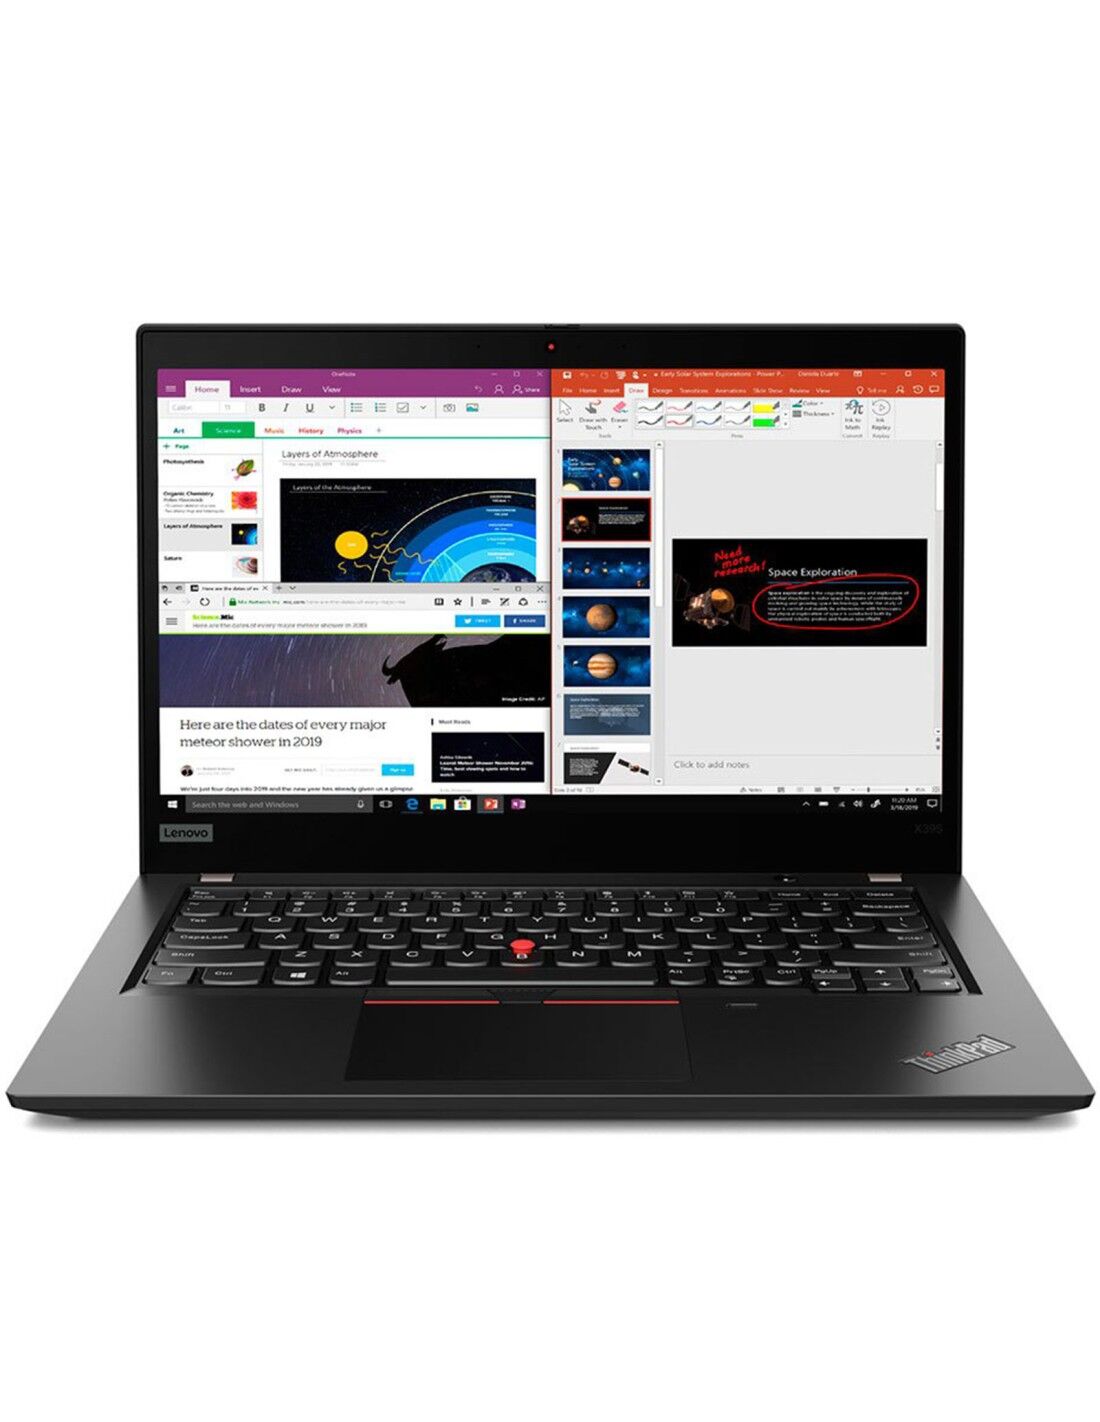 Lenovo ThinkPad X395 Notebook 13.3" Touchscreen AMD Ryzen 5 3500U Ram 16GB SSD 256GB Webcam (Ricondizionato Grado A)